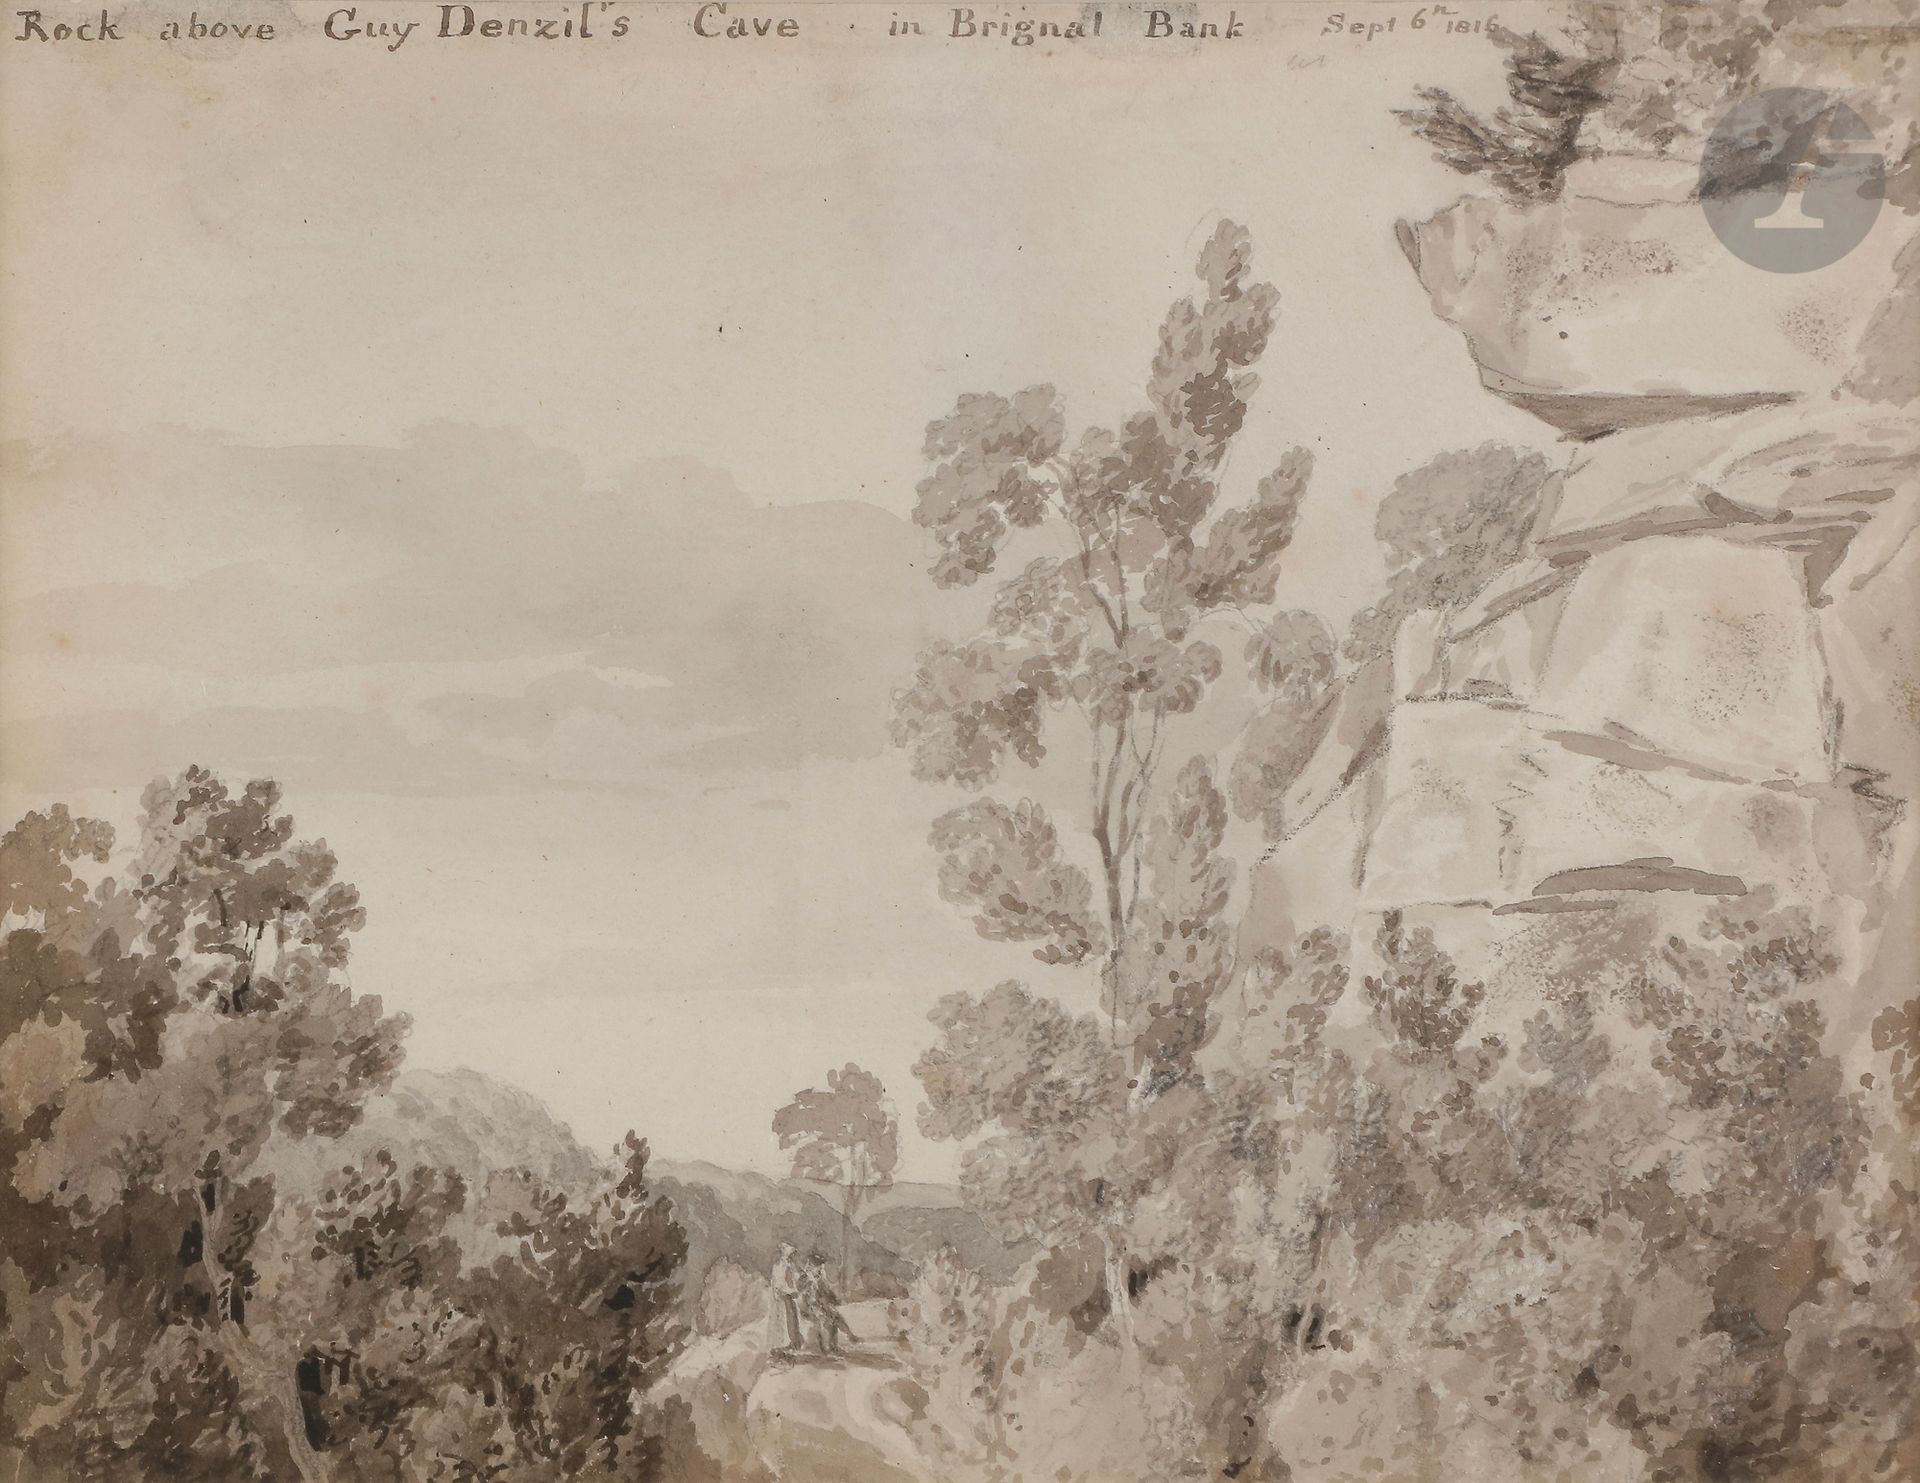 Null 伊丽莎白-范肖(1779-1855
)布利格纳银行盖伊-丹齐尔洞上方的岩石，
1816年黑色铅笔笔触上的布朗维斯

。


位于上面的位置和日期。
1&hellip;